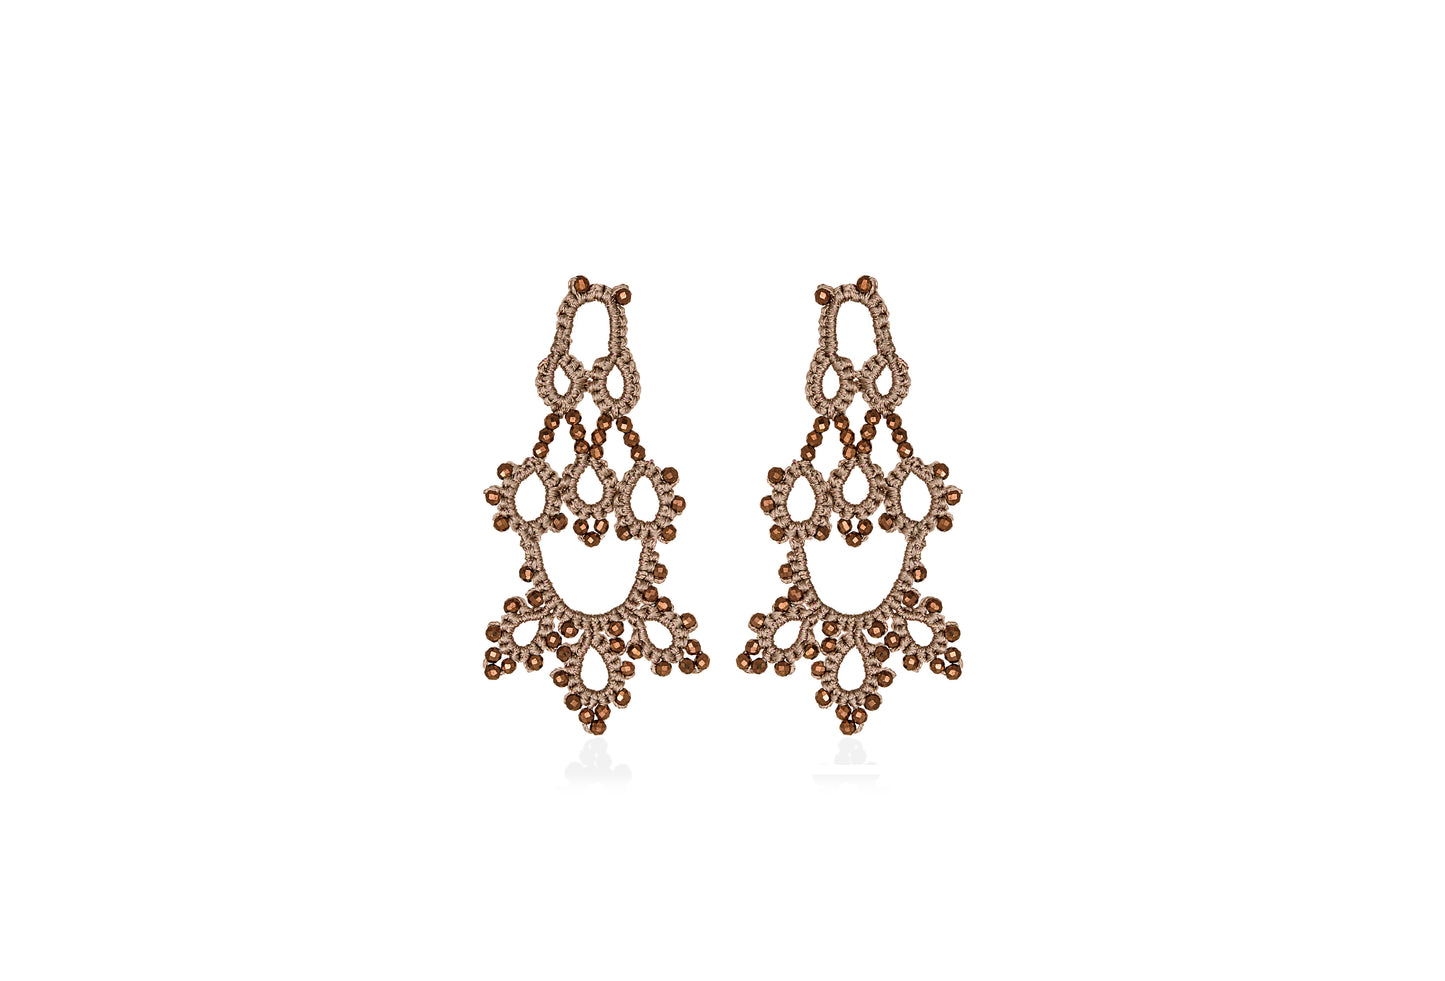 Bijoux lace earrings, chocolat bronze